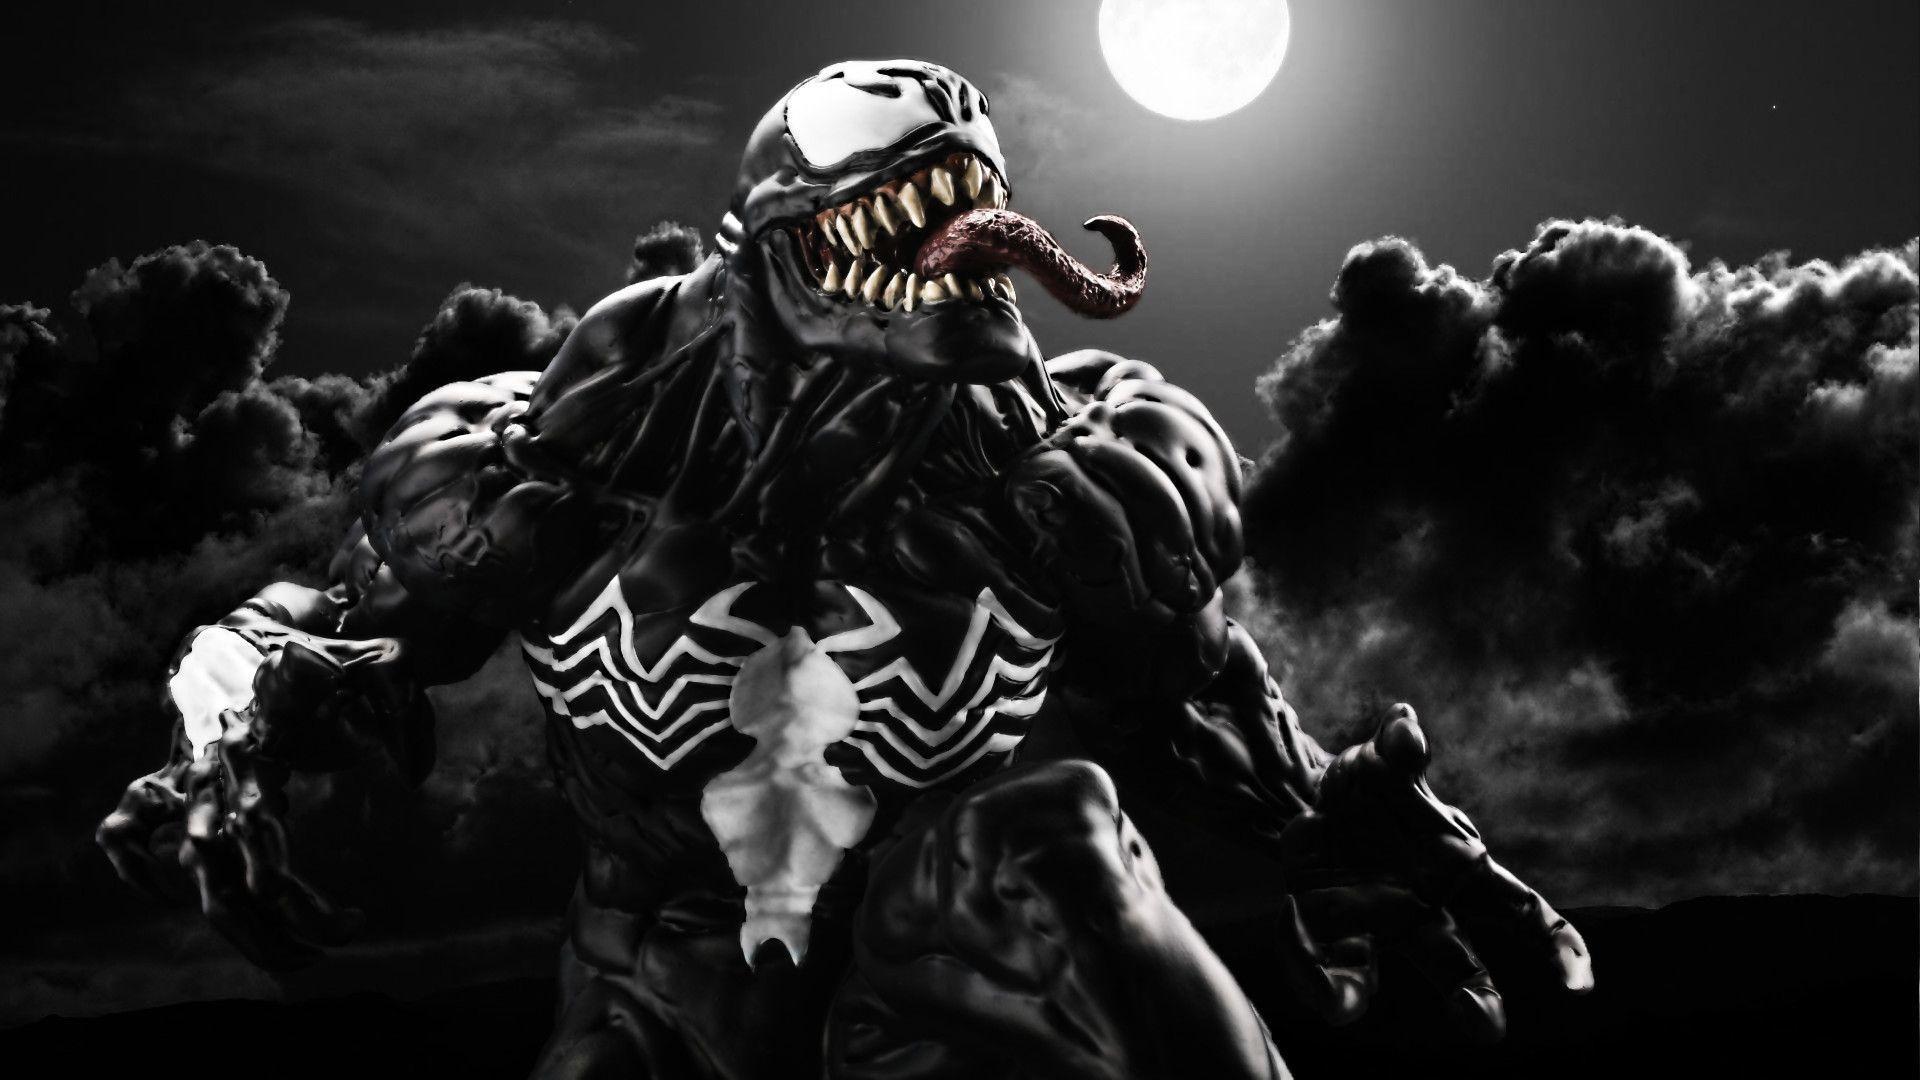 Agent Venom Wallpaper background picture